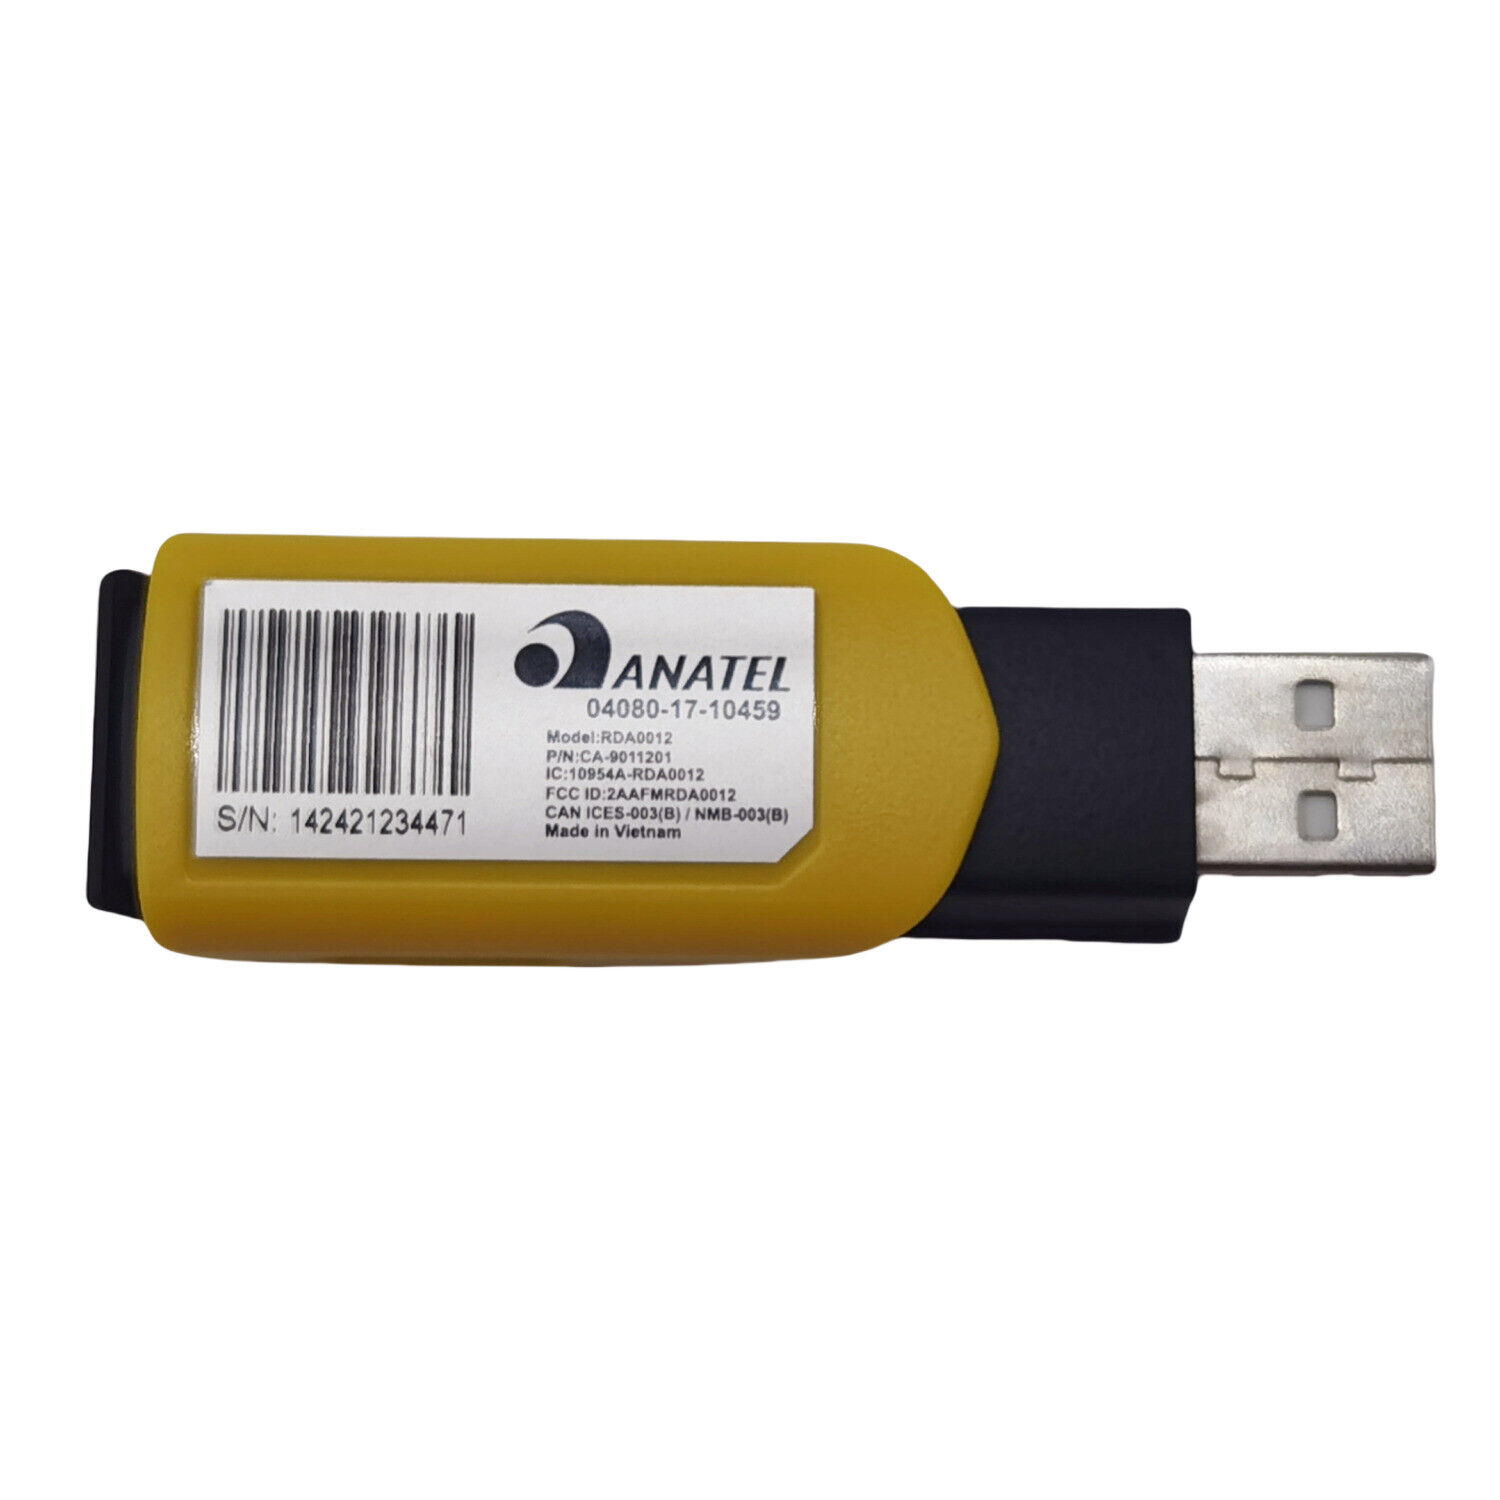 Corsair Void Pro Wireless Headset USB Dongle Plug RDA0012 Transceiver 75-004170